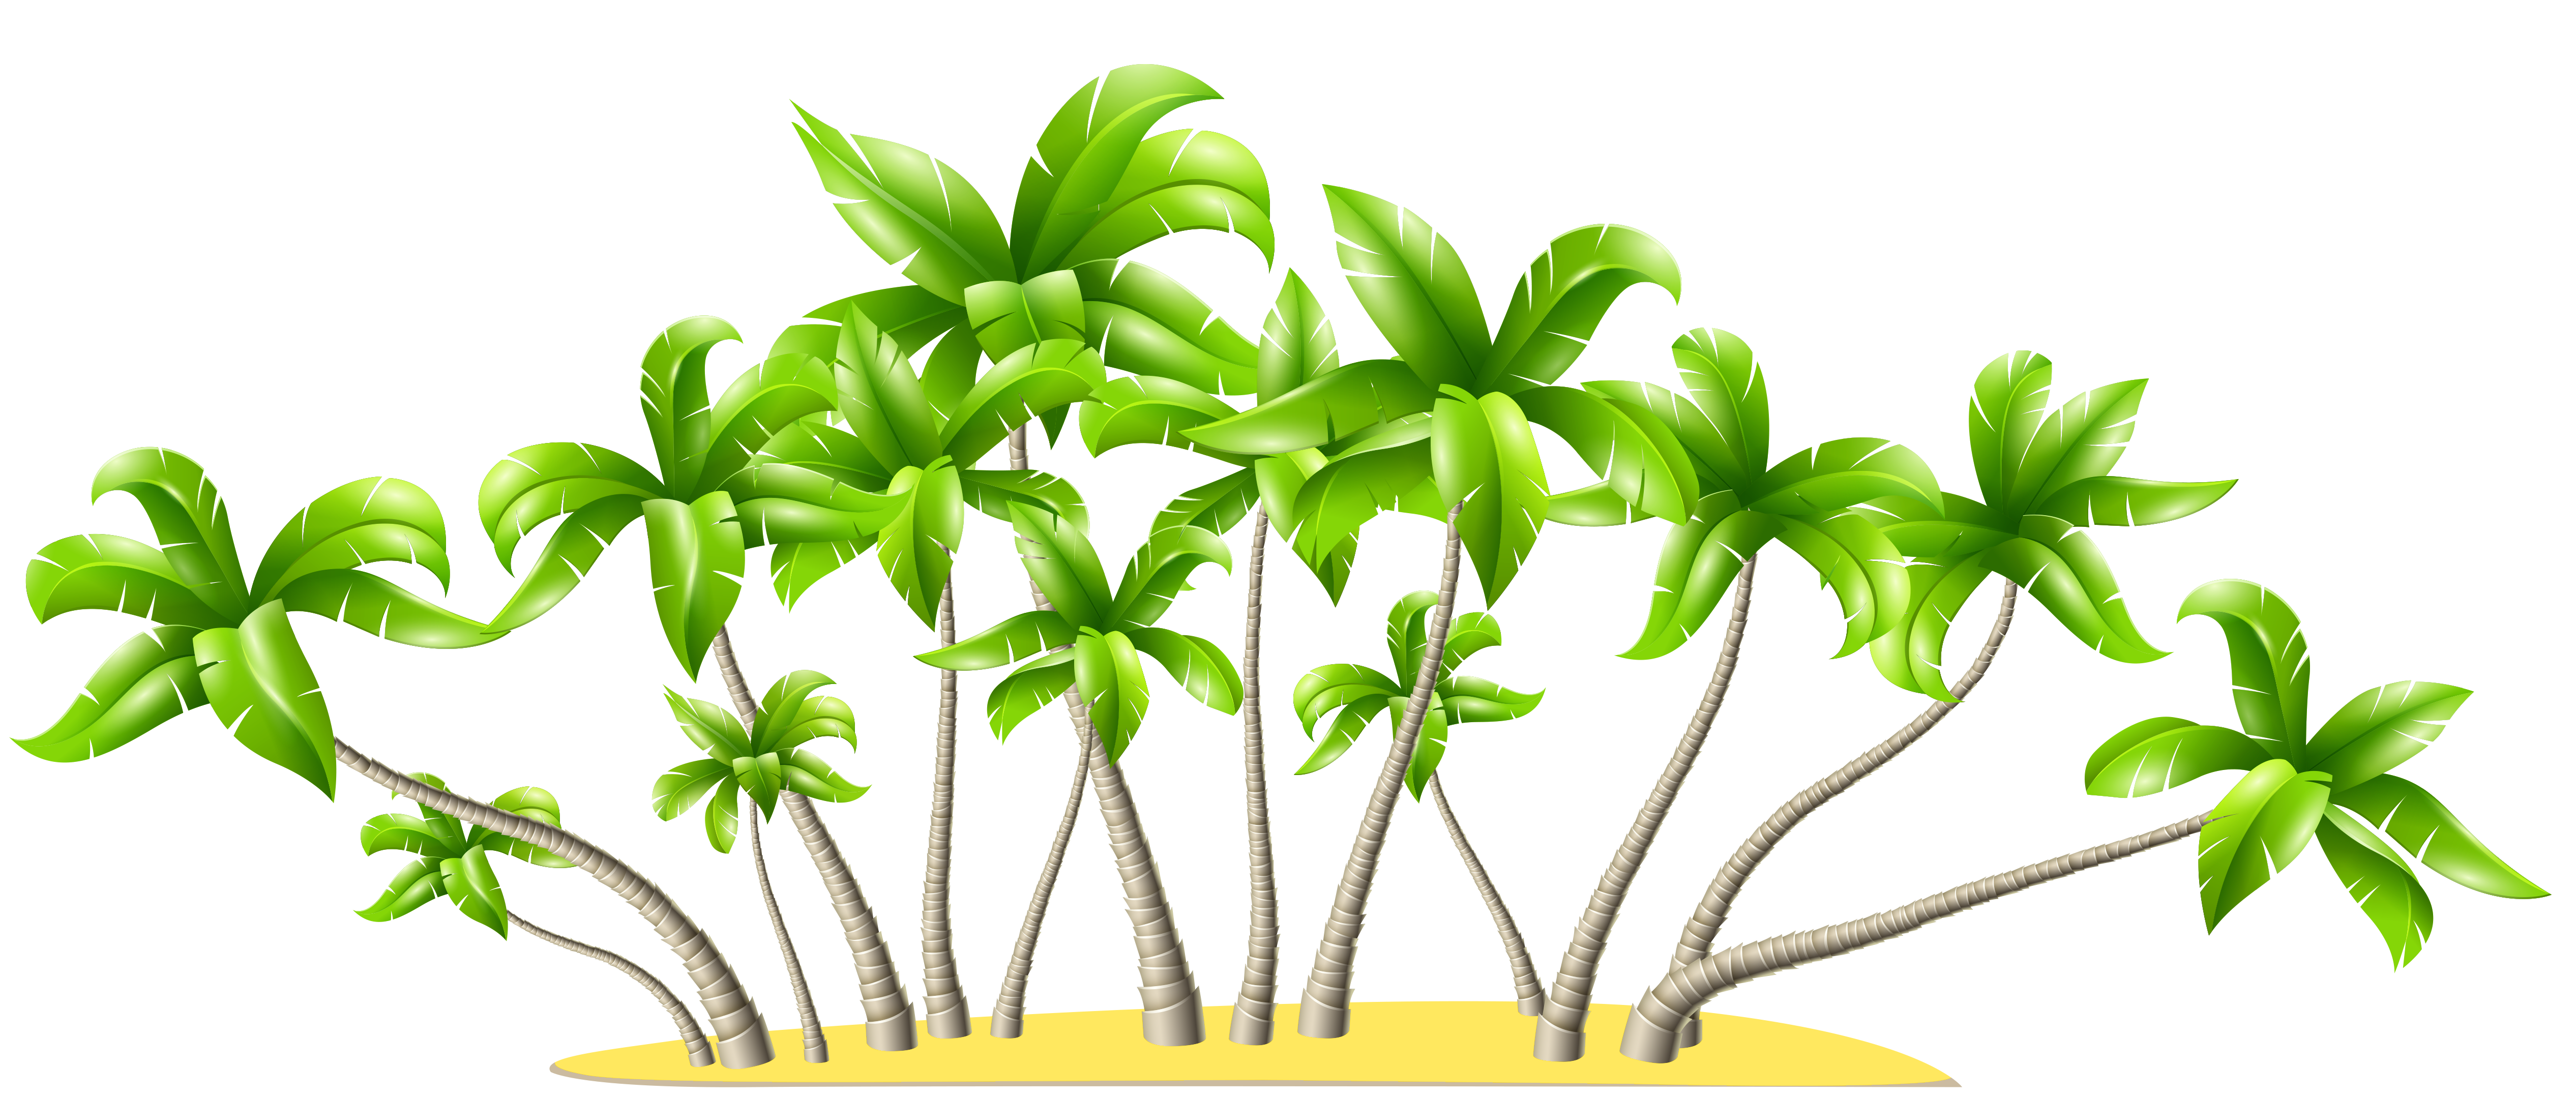 Palm trees clipart - Cliparting.com